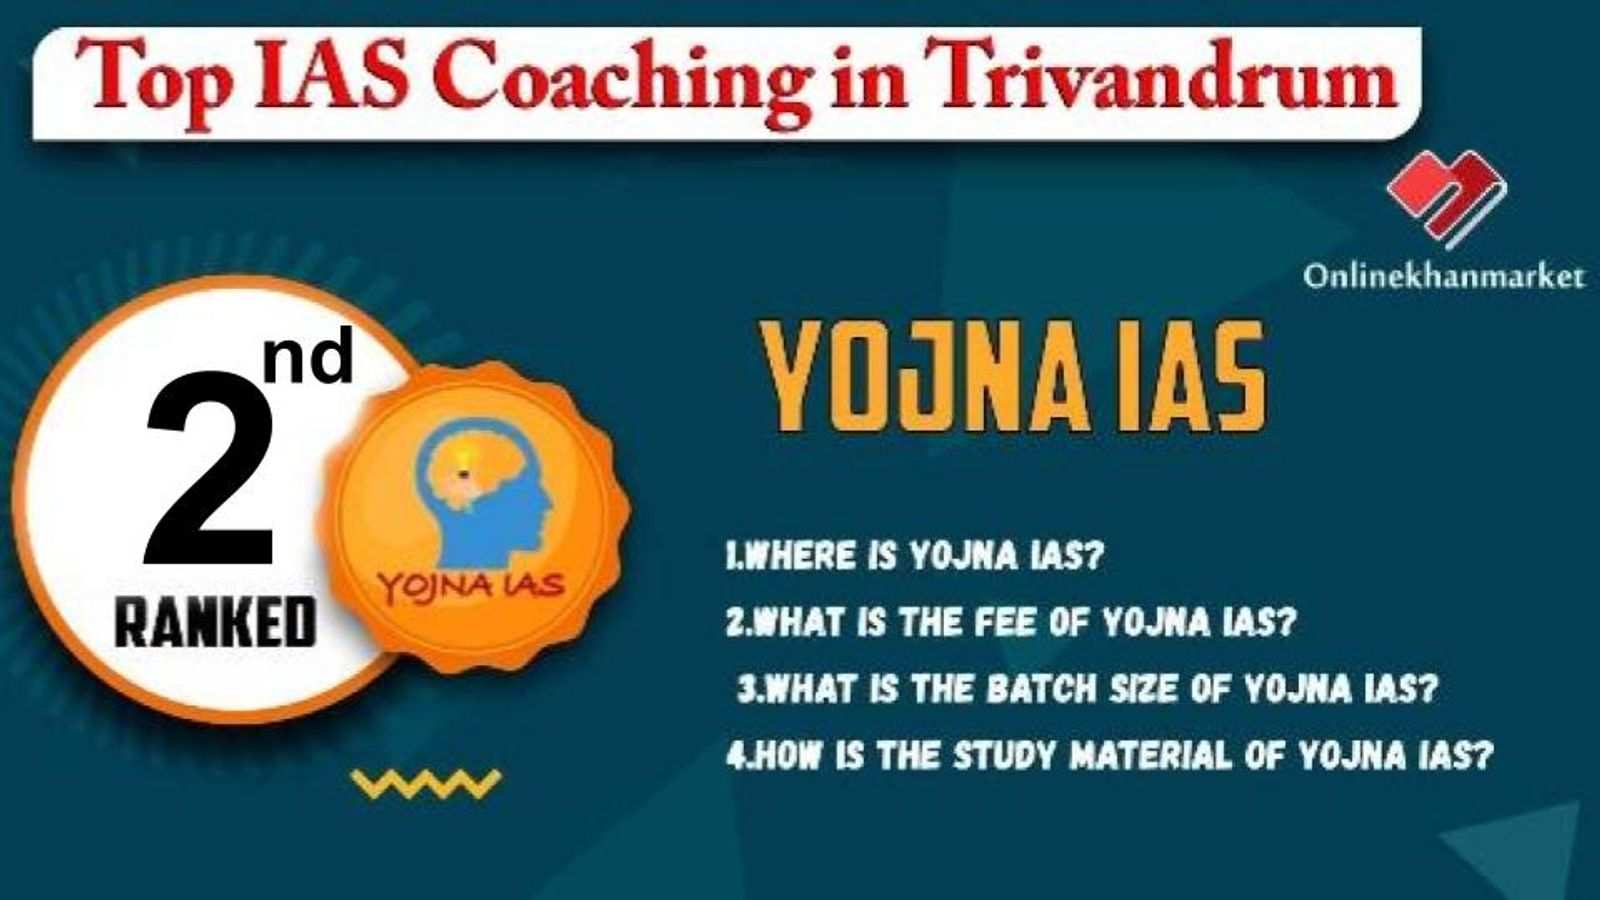 Top IAS Coaching in Trivandrum